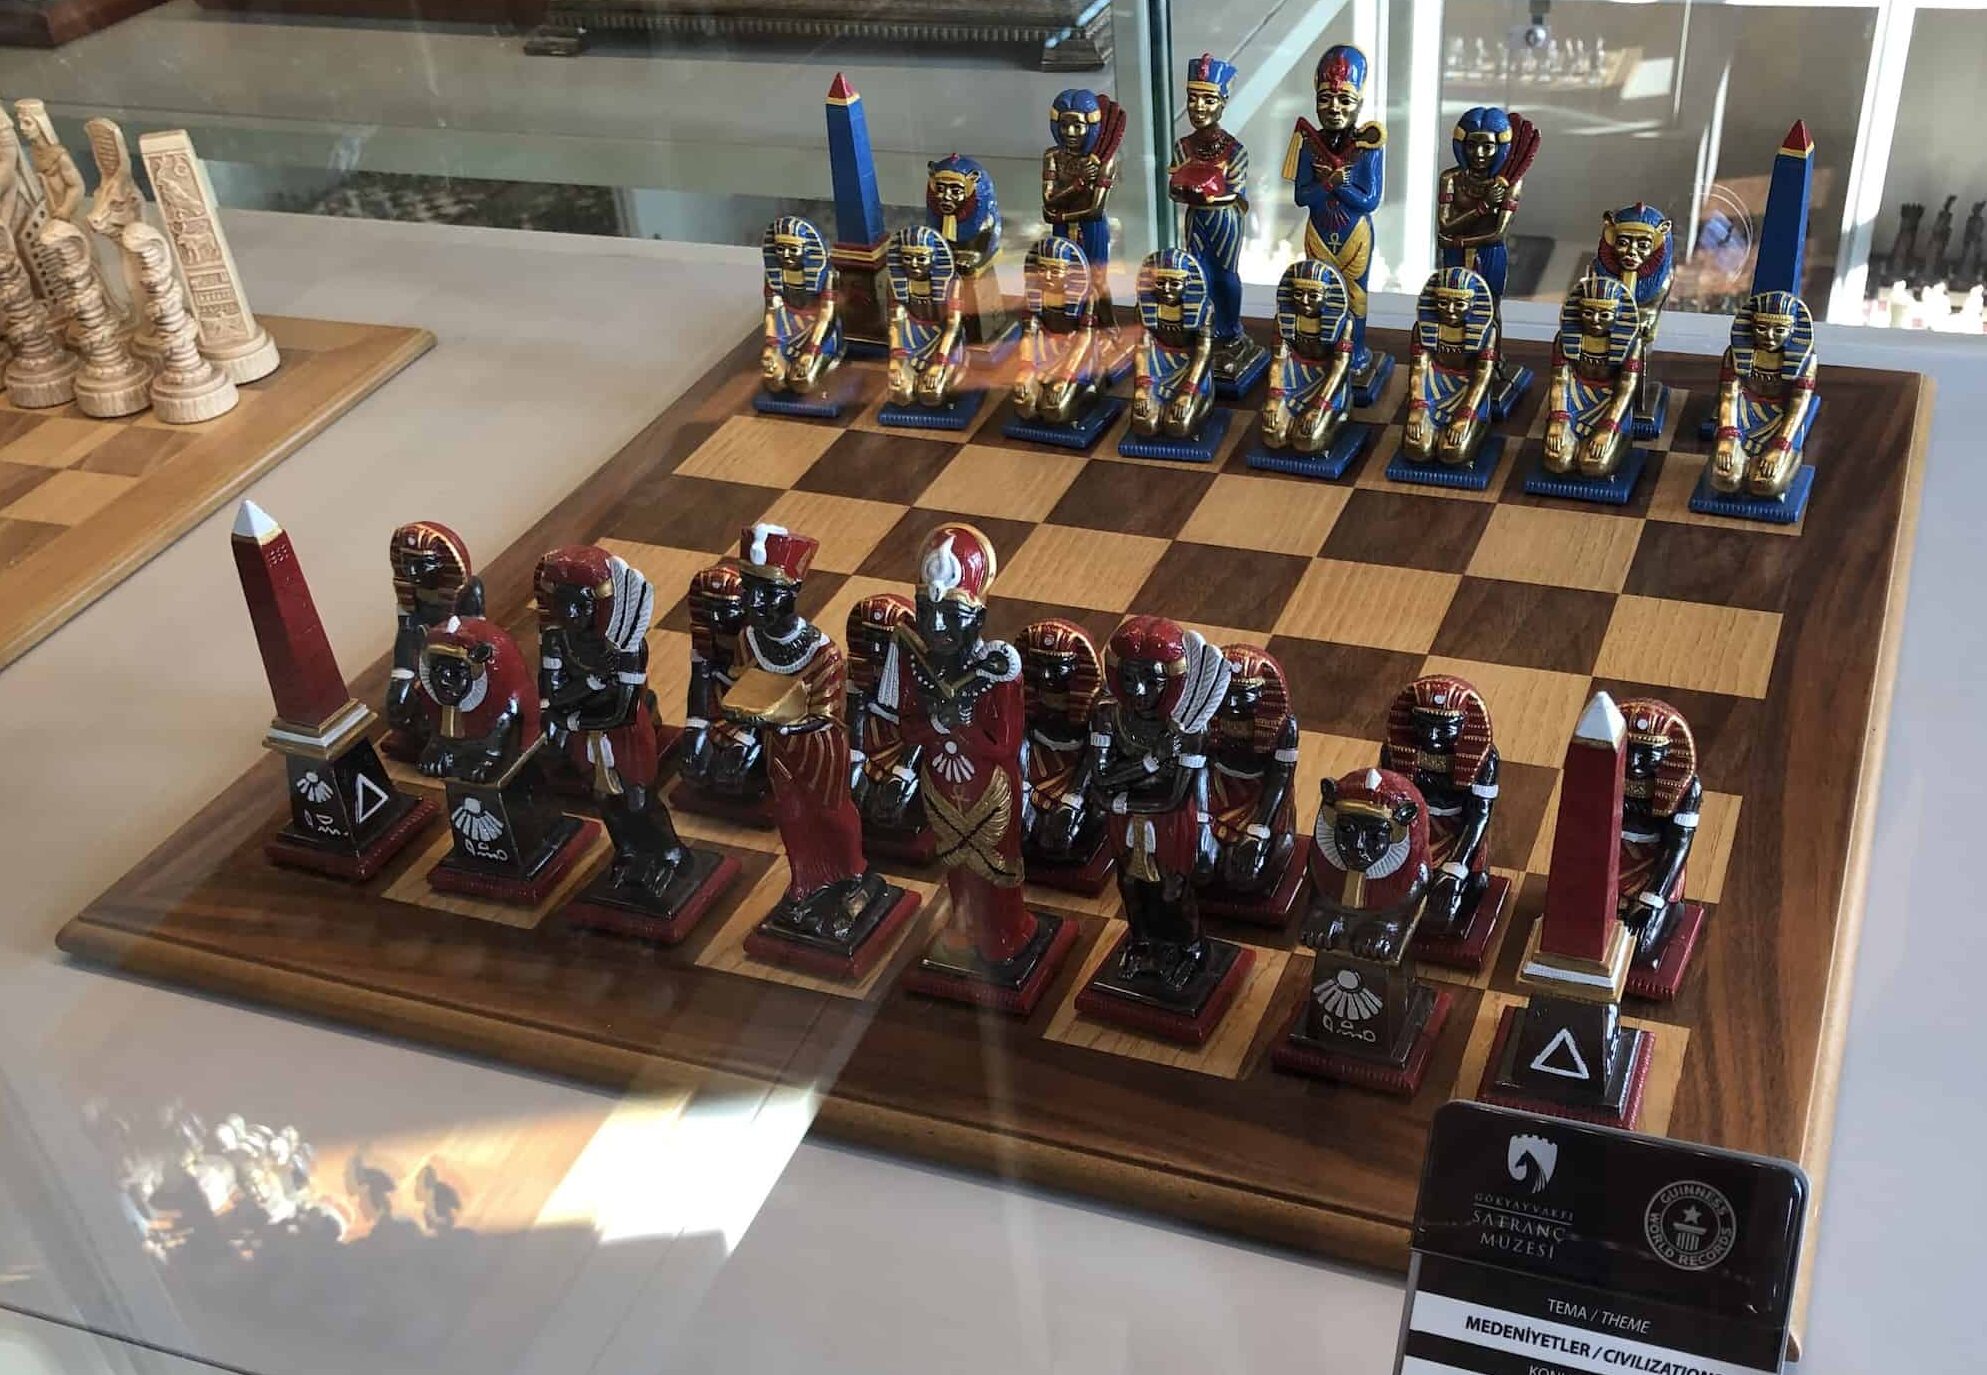 Cast metal chess set (Egypt) at the Gökyay Foundation Chess Museum in Ankara, Turkey